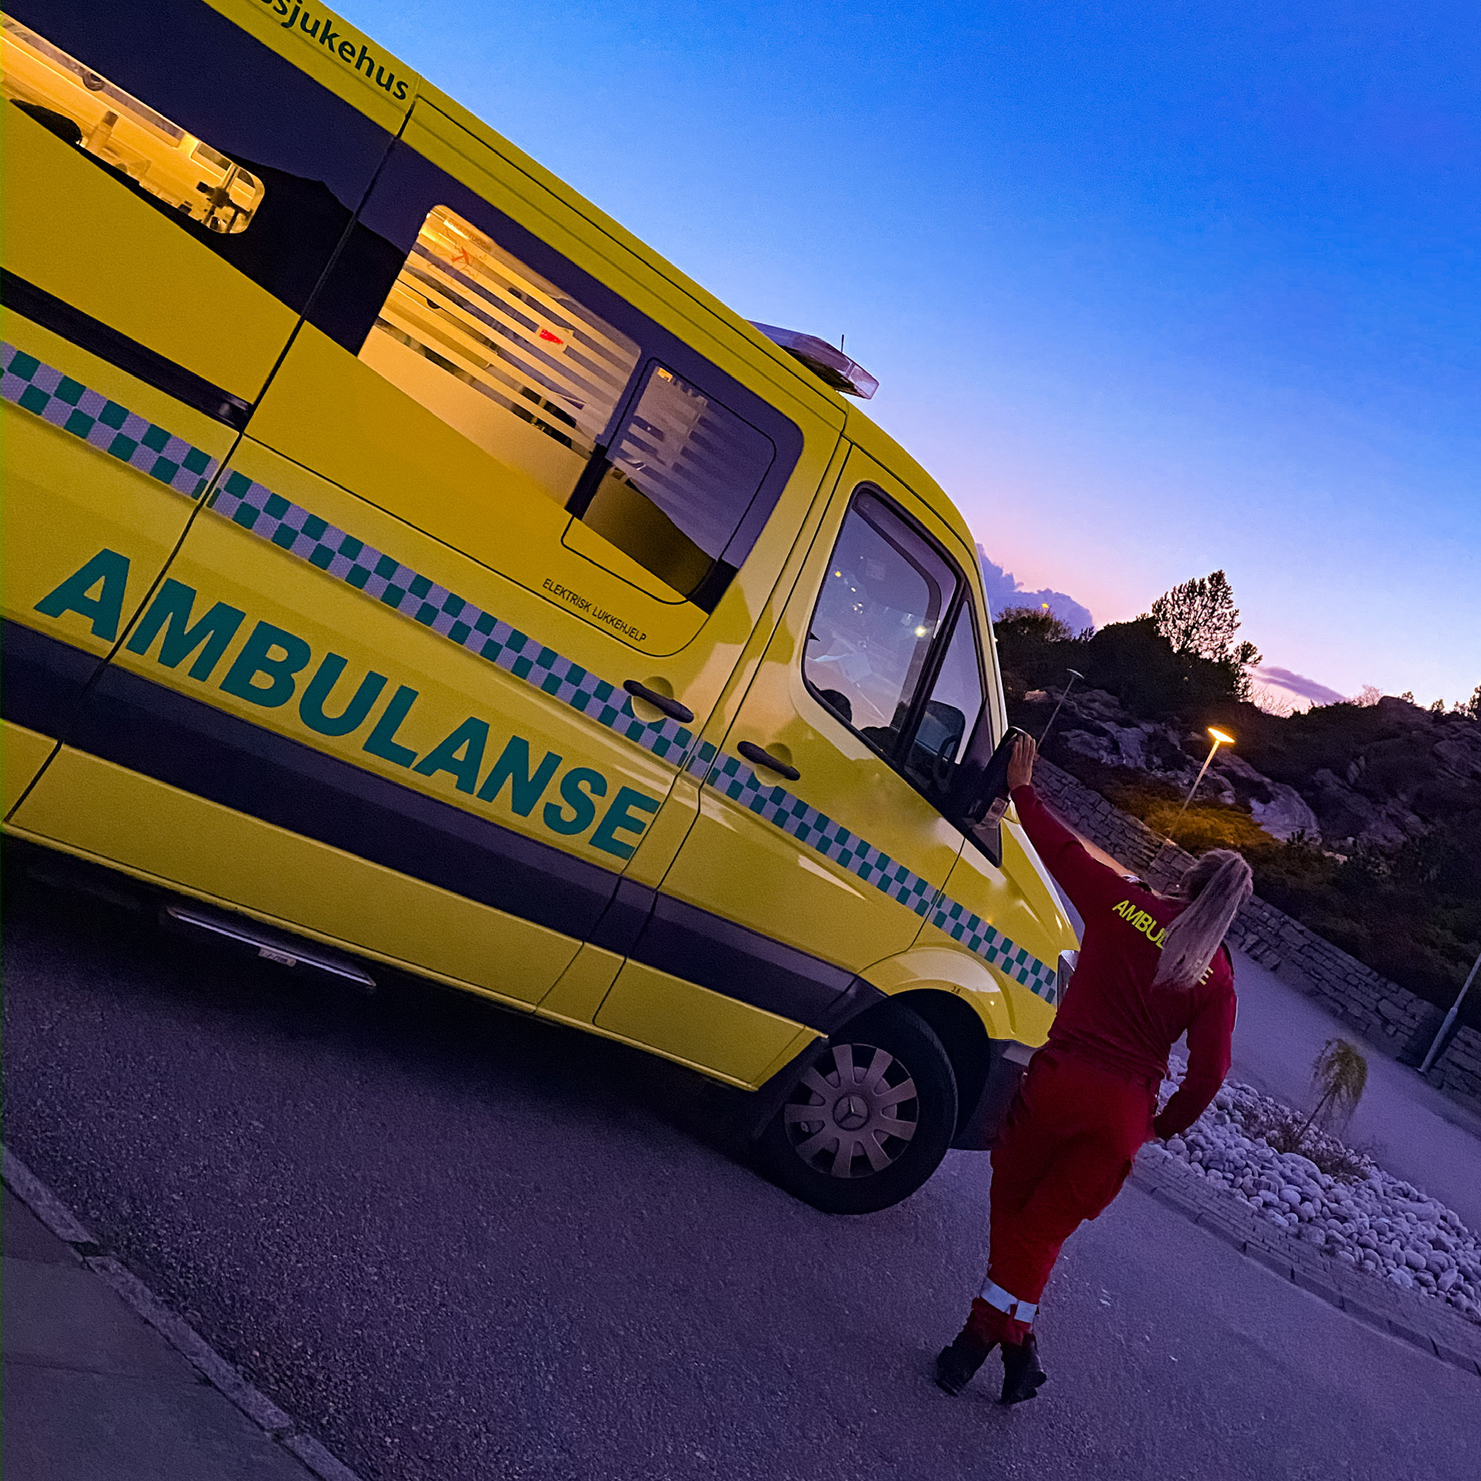 Ambulanse-blalys-cingulum-2